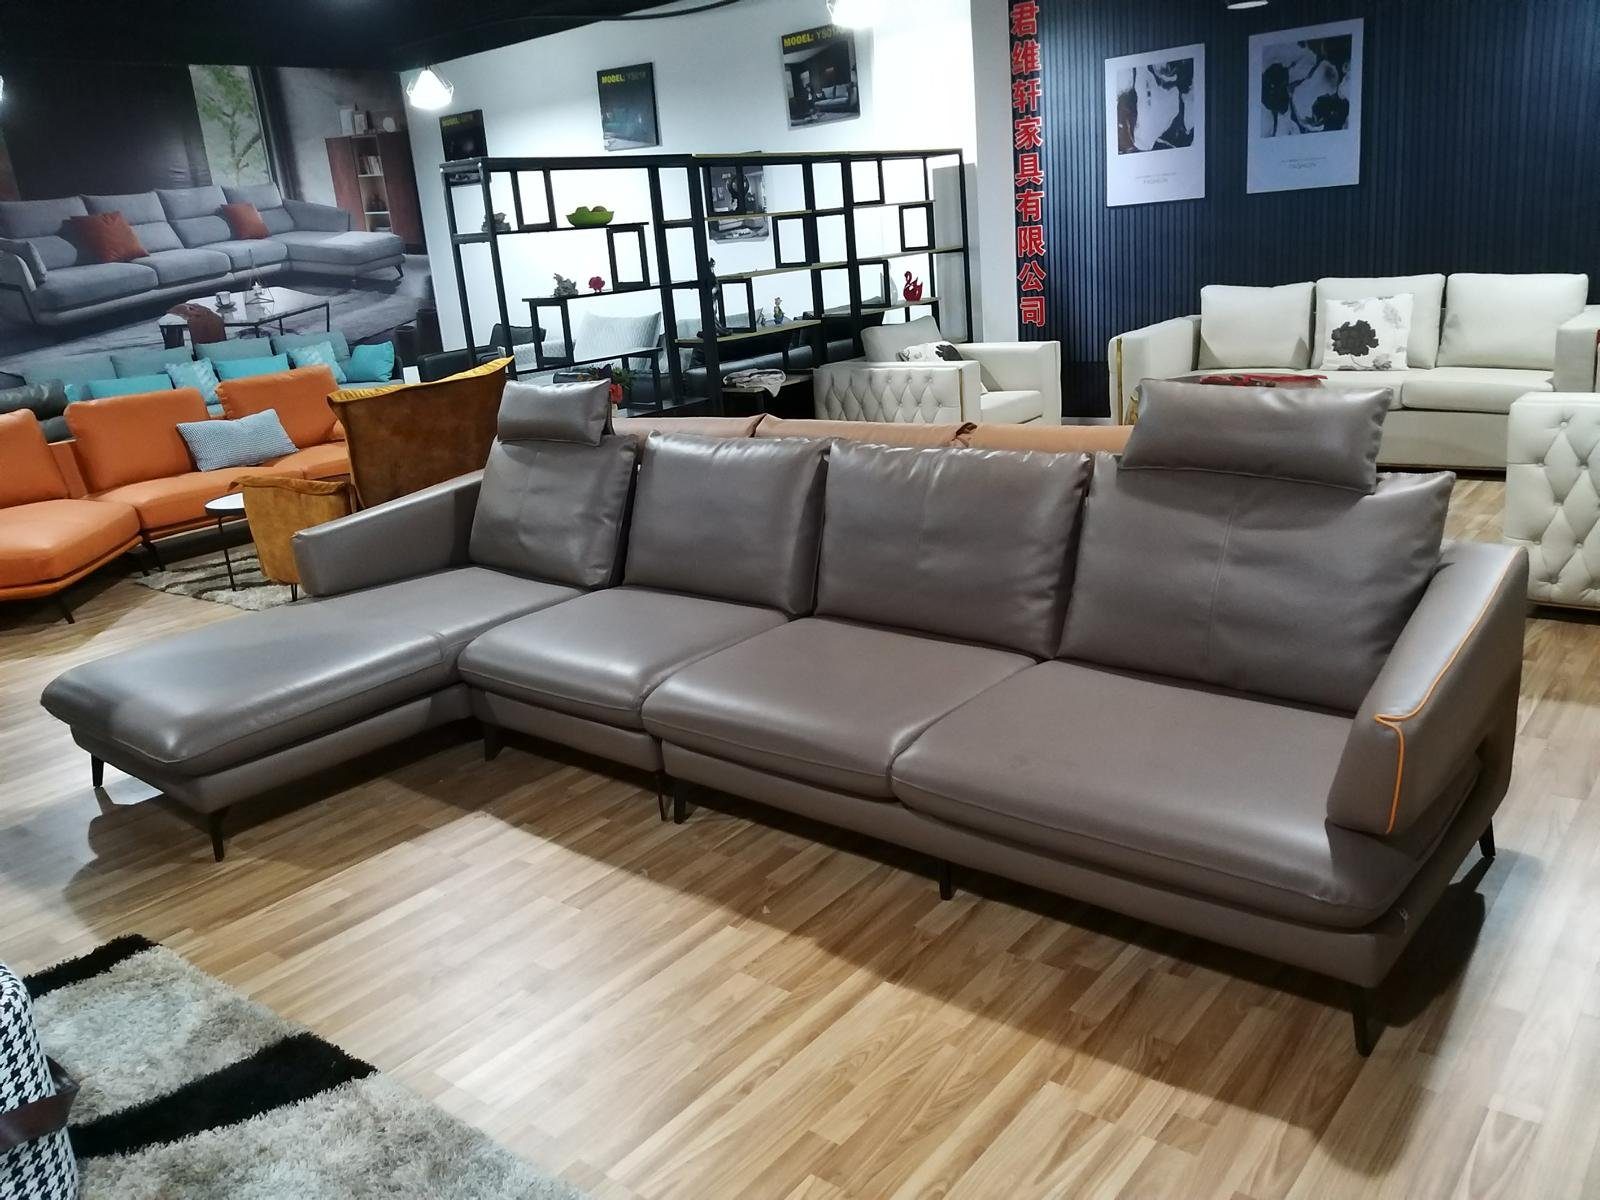 JVmoebel Ecksofa Ecksofa Eckcouch Sofa Polster Ecke Couch Leder, Made in Europe